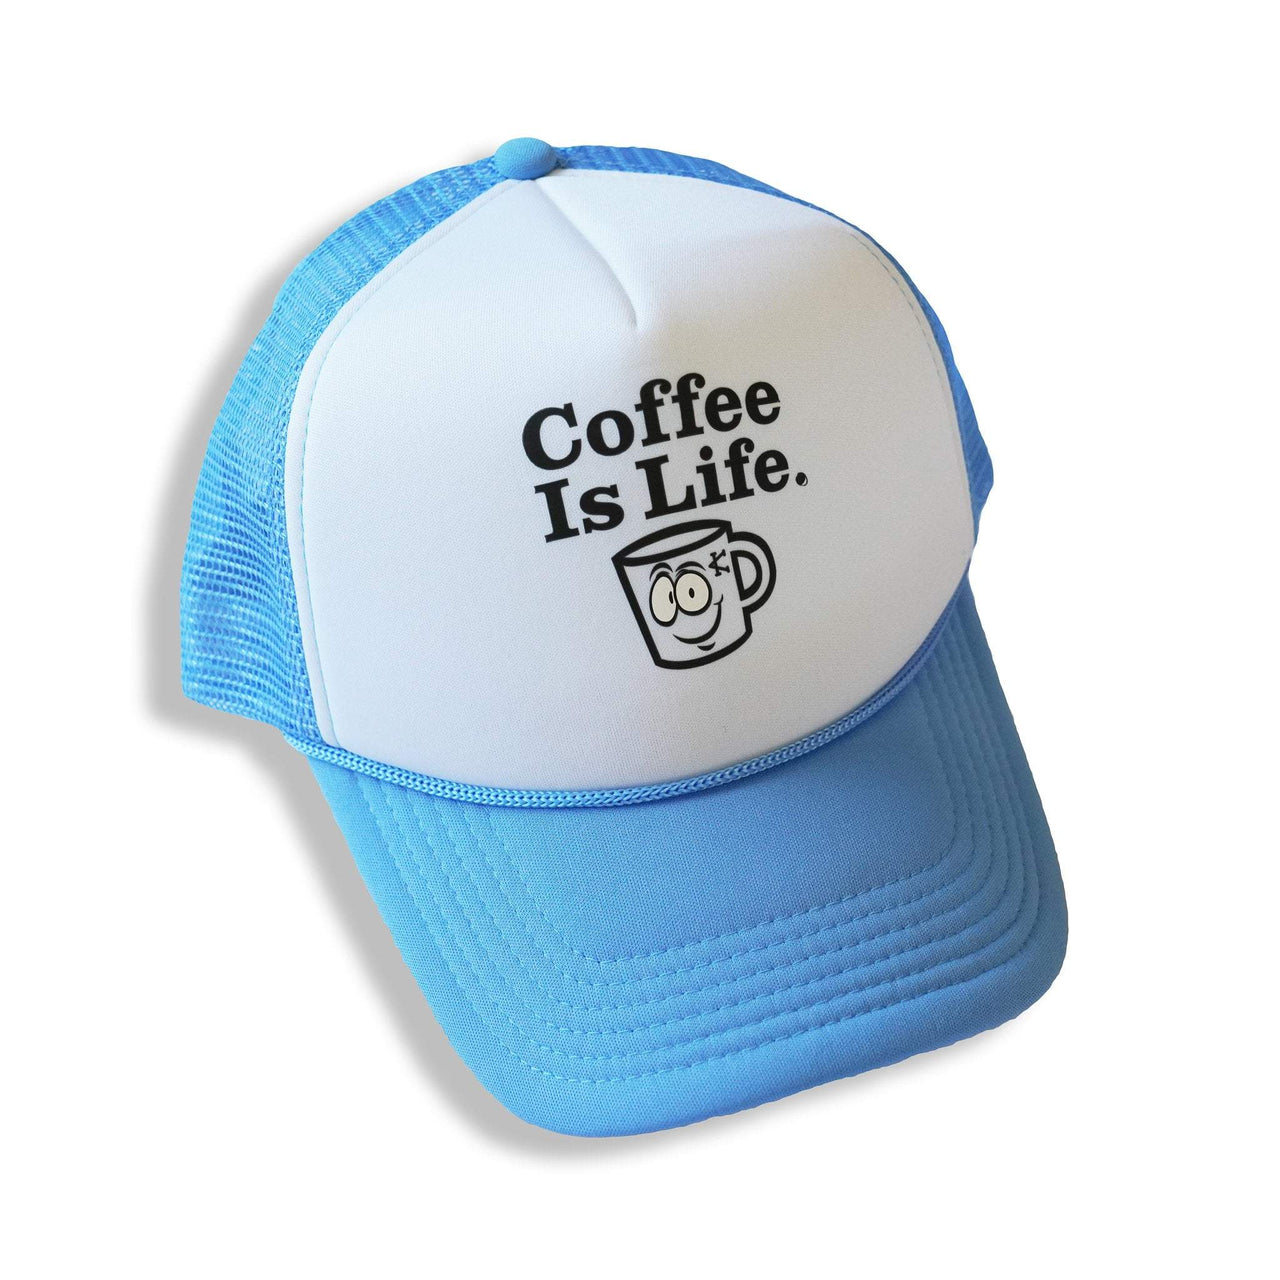 Caffeine and Kilos Inc Accessories Coffee Is Life Trucker Hat